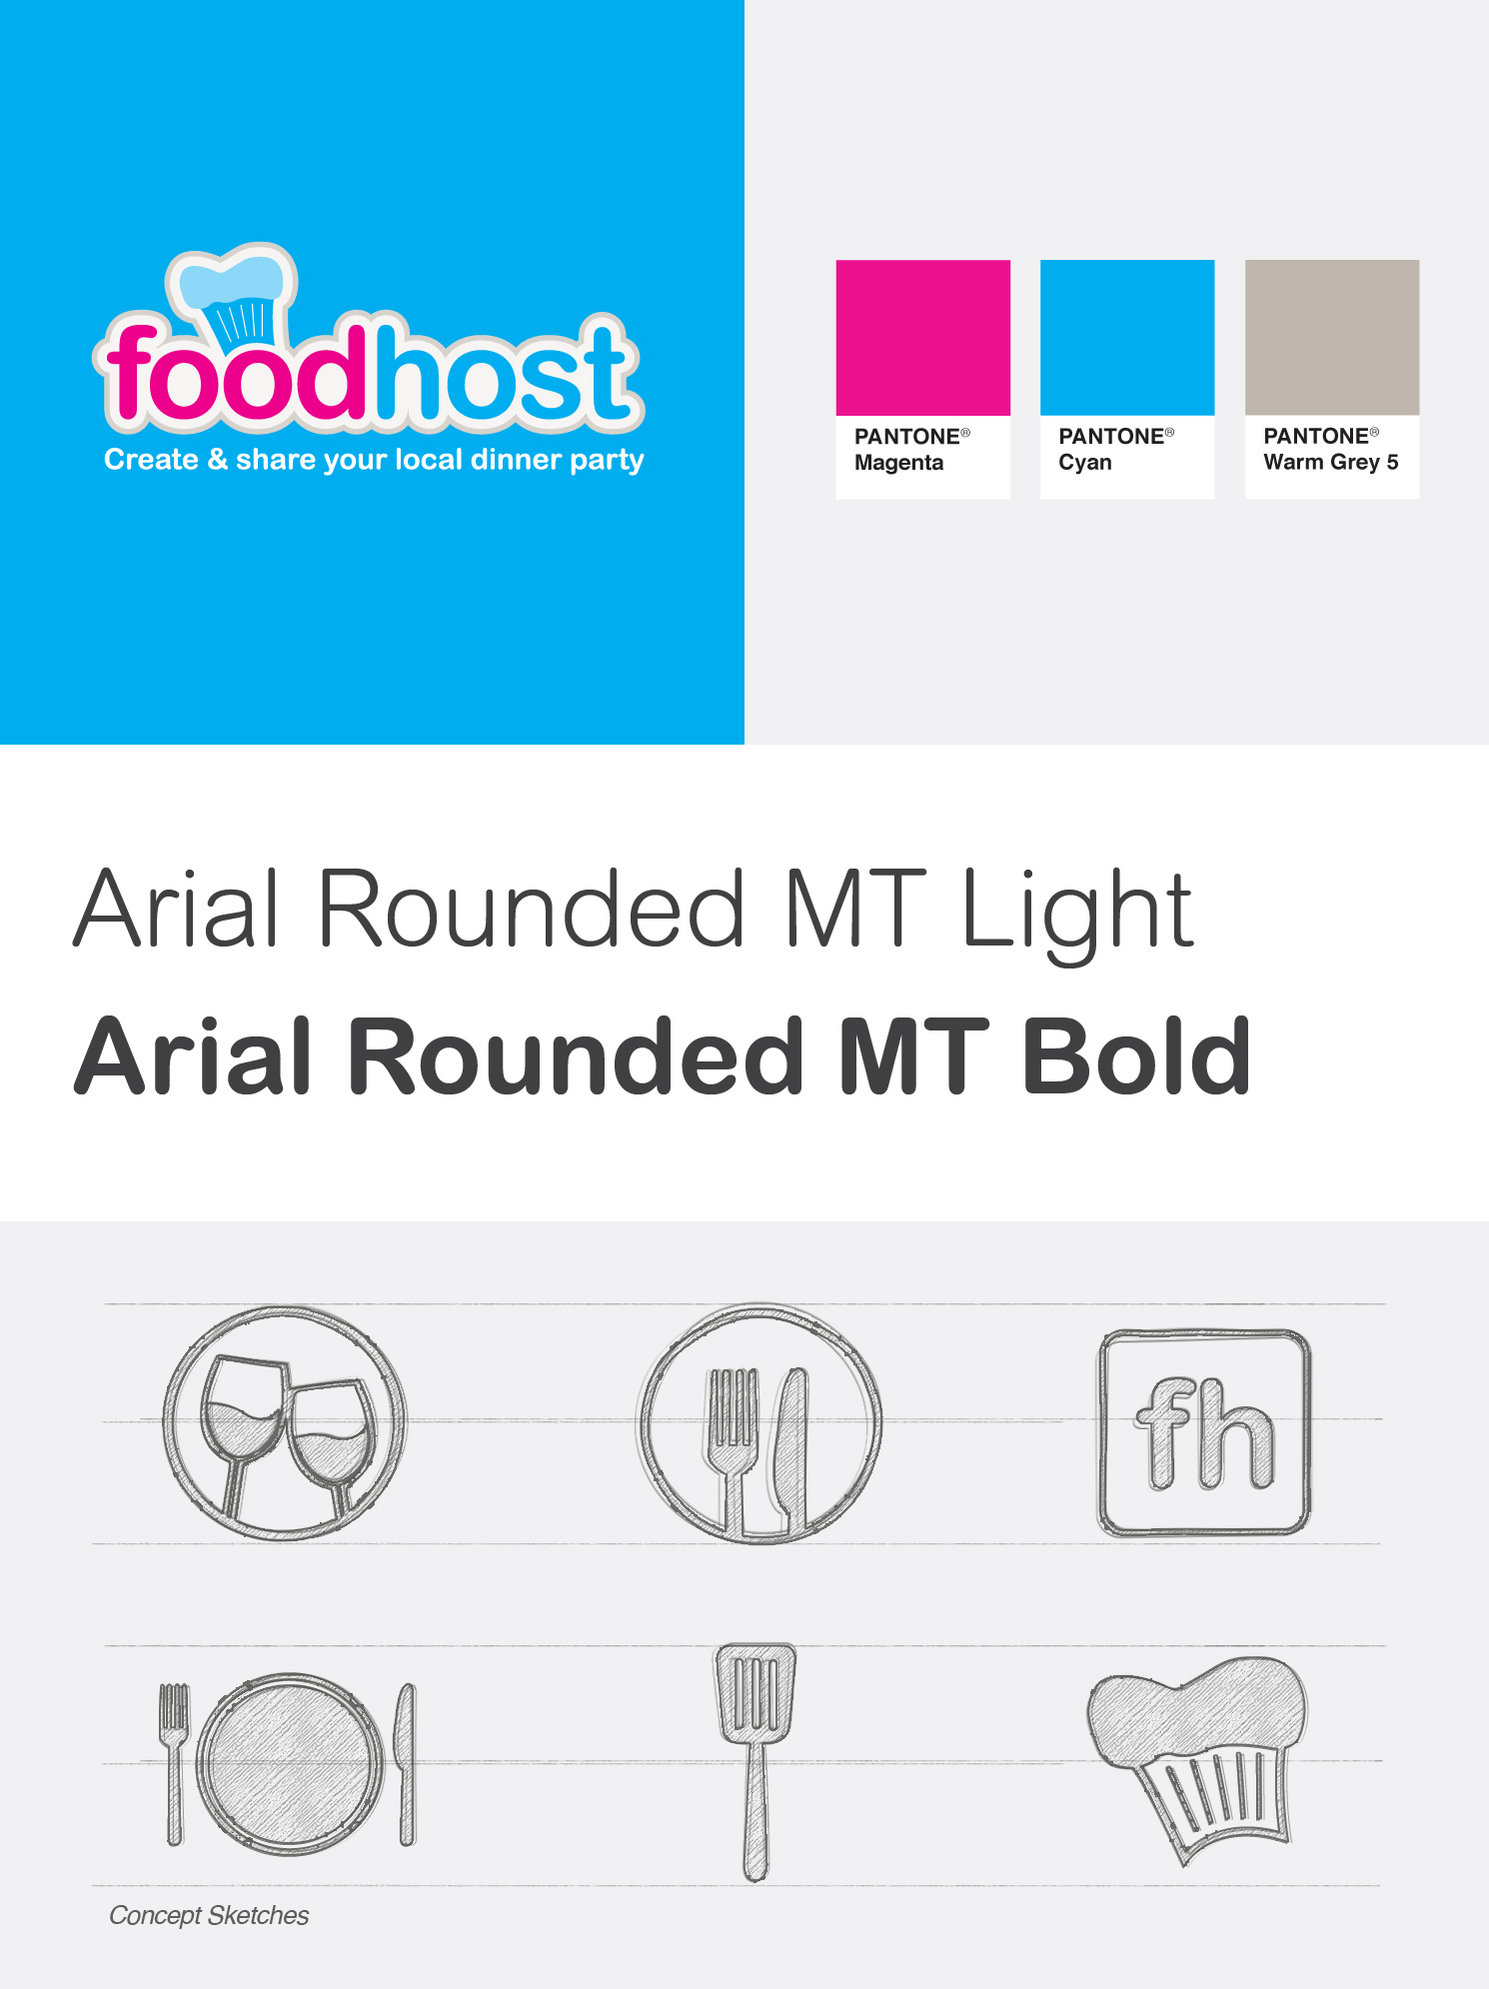 foodhost logo design